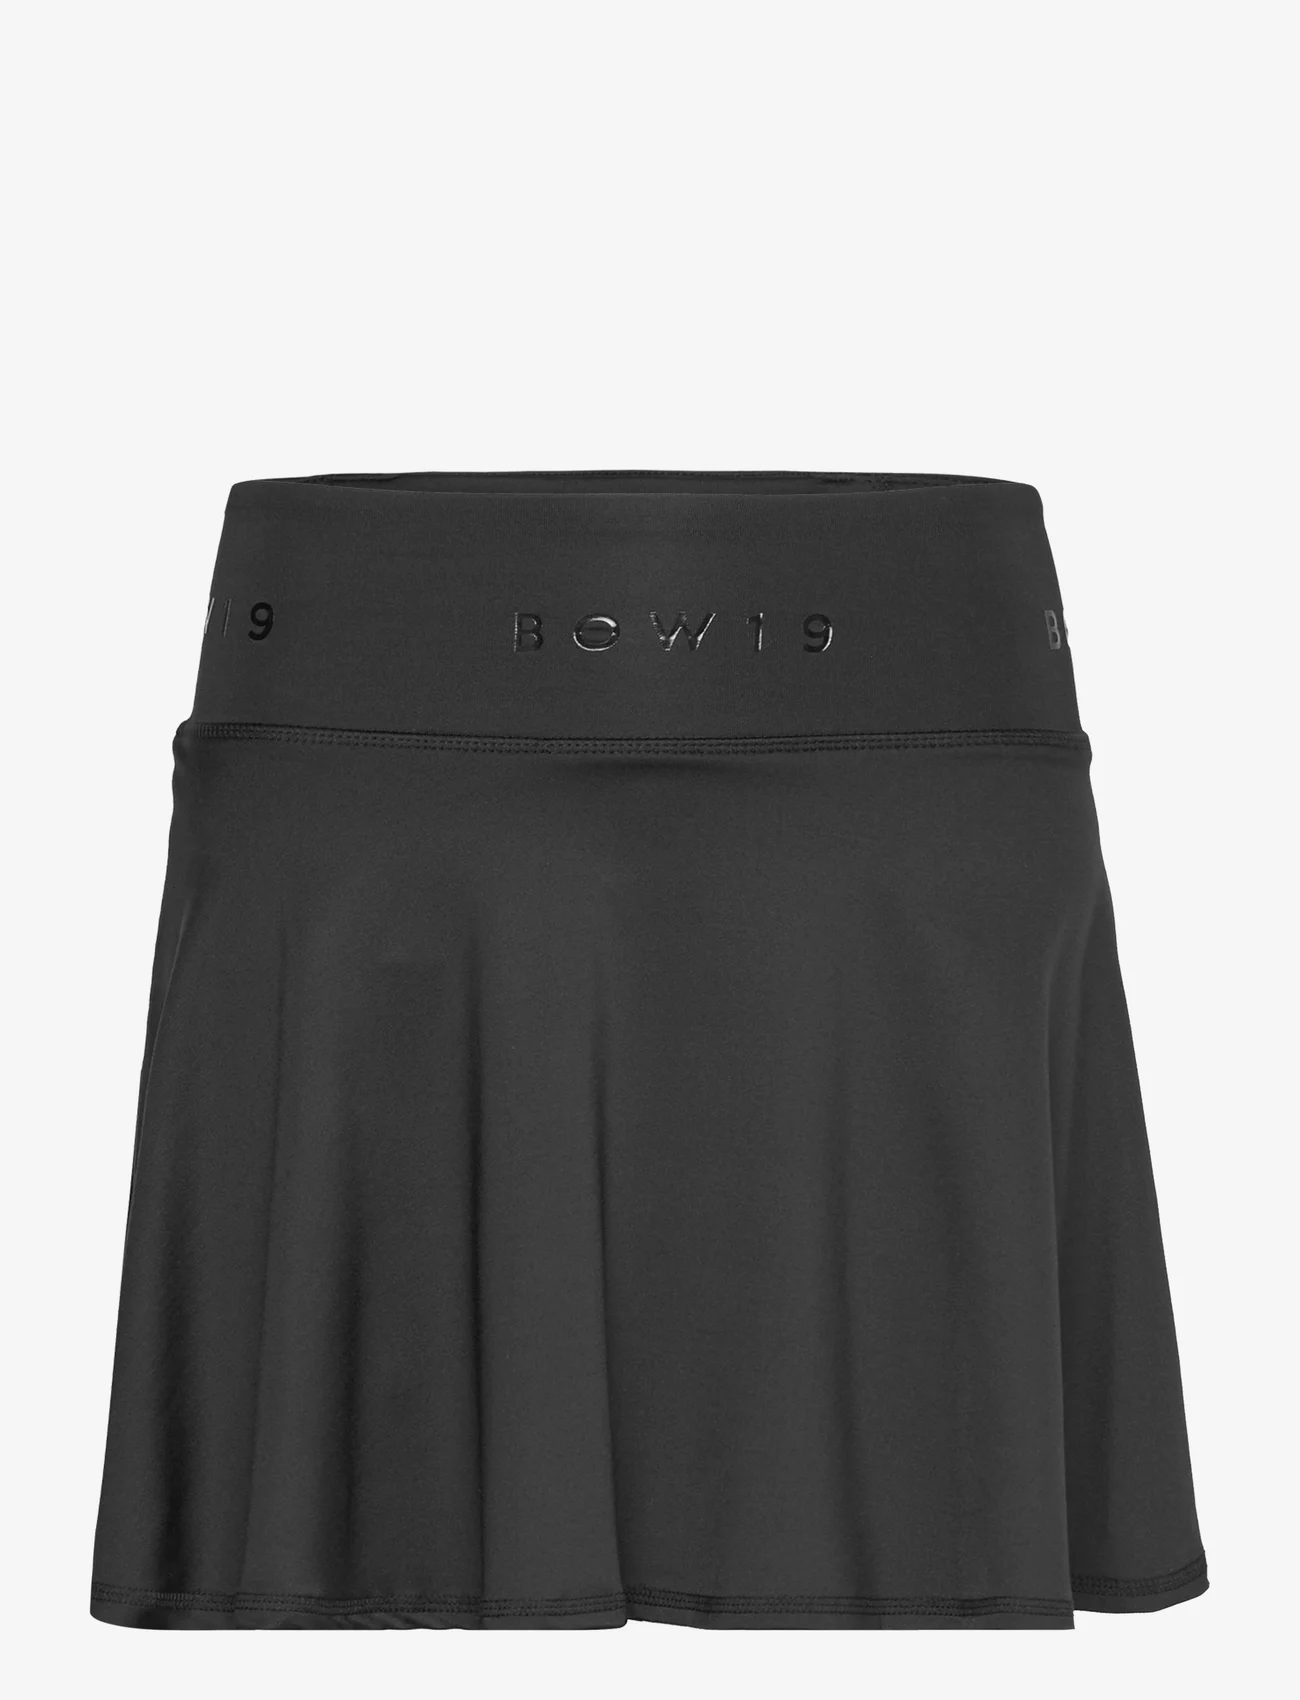 BOW19 - Classy skirt - svārki ar ielocēm - black - 0